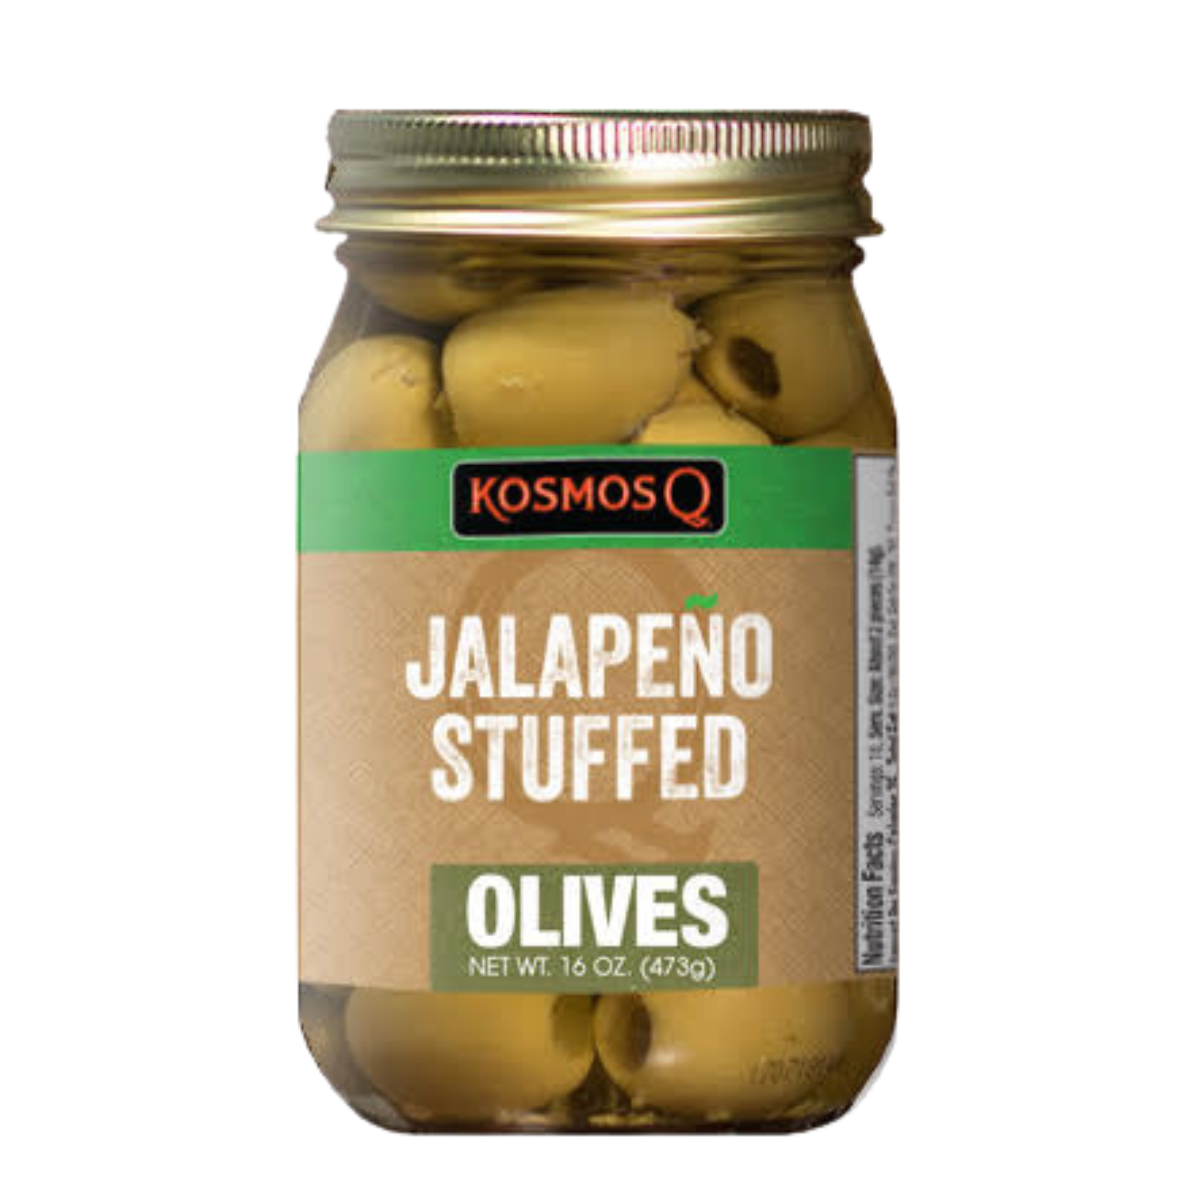 Kosmos Q BBQ Products & Supplies Jalapeno Stuffed Olives